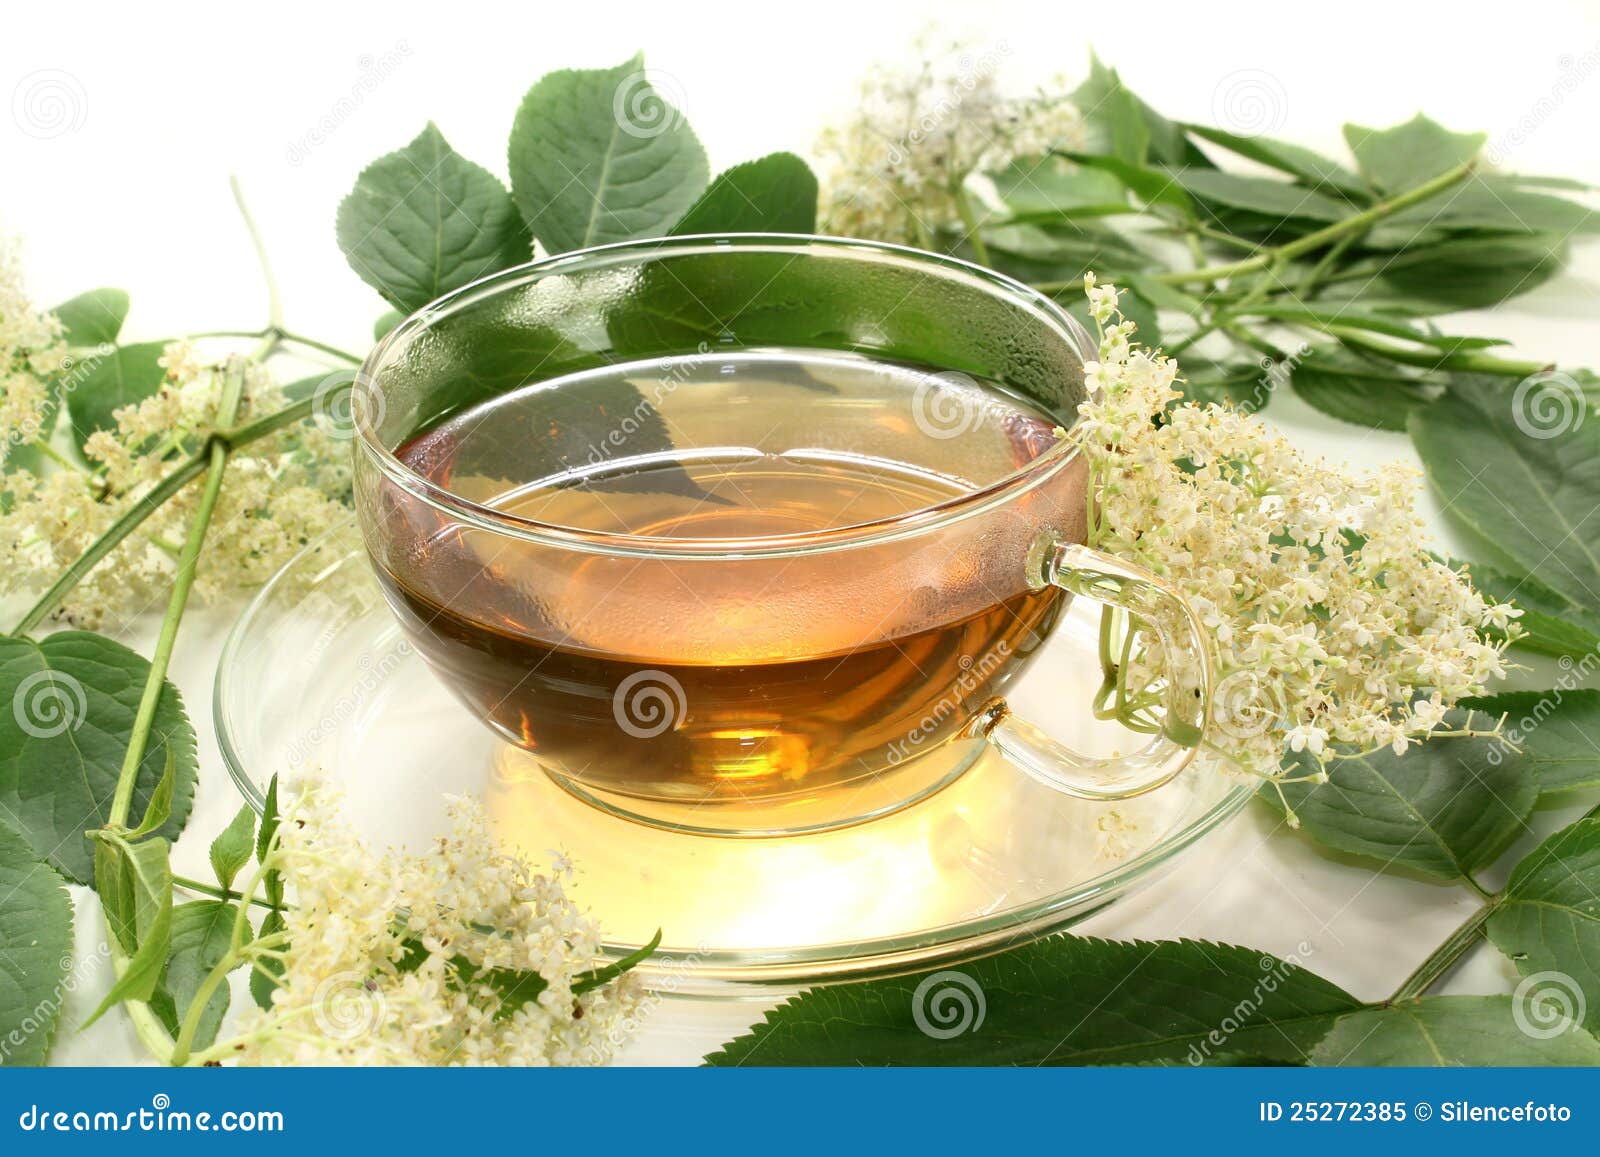 elderflower tea